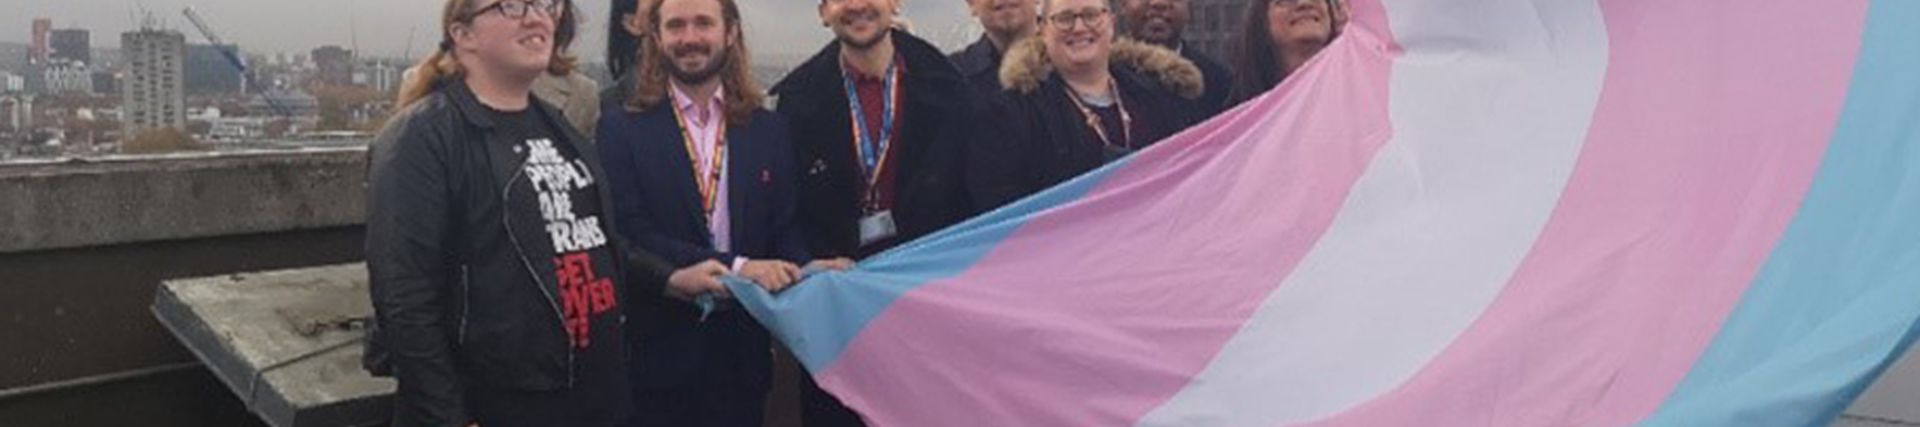 Trans pride flag above 55 Broadway, 12 November 2018, photo © Andy De Santis